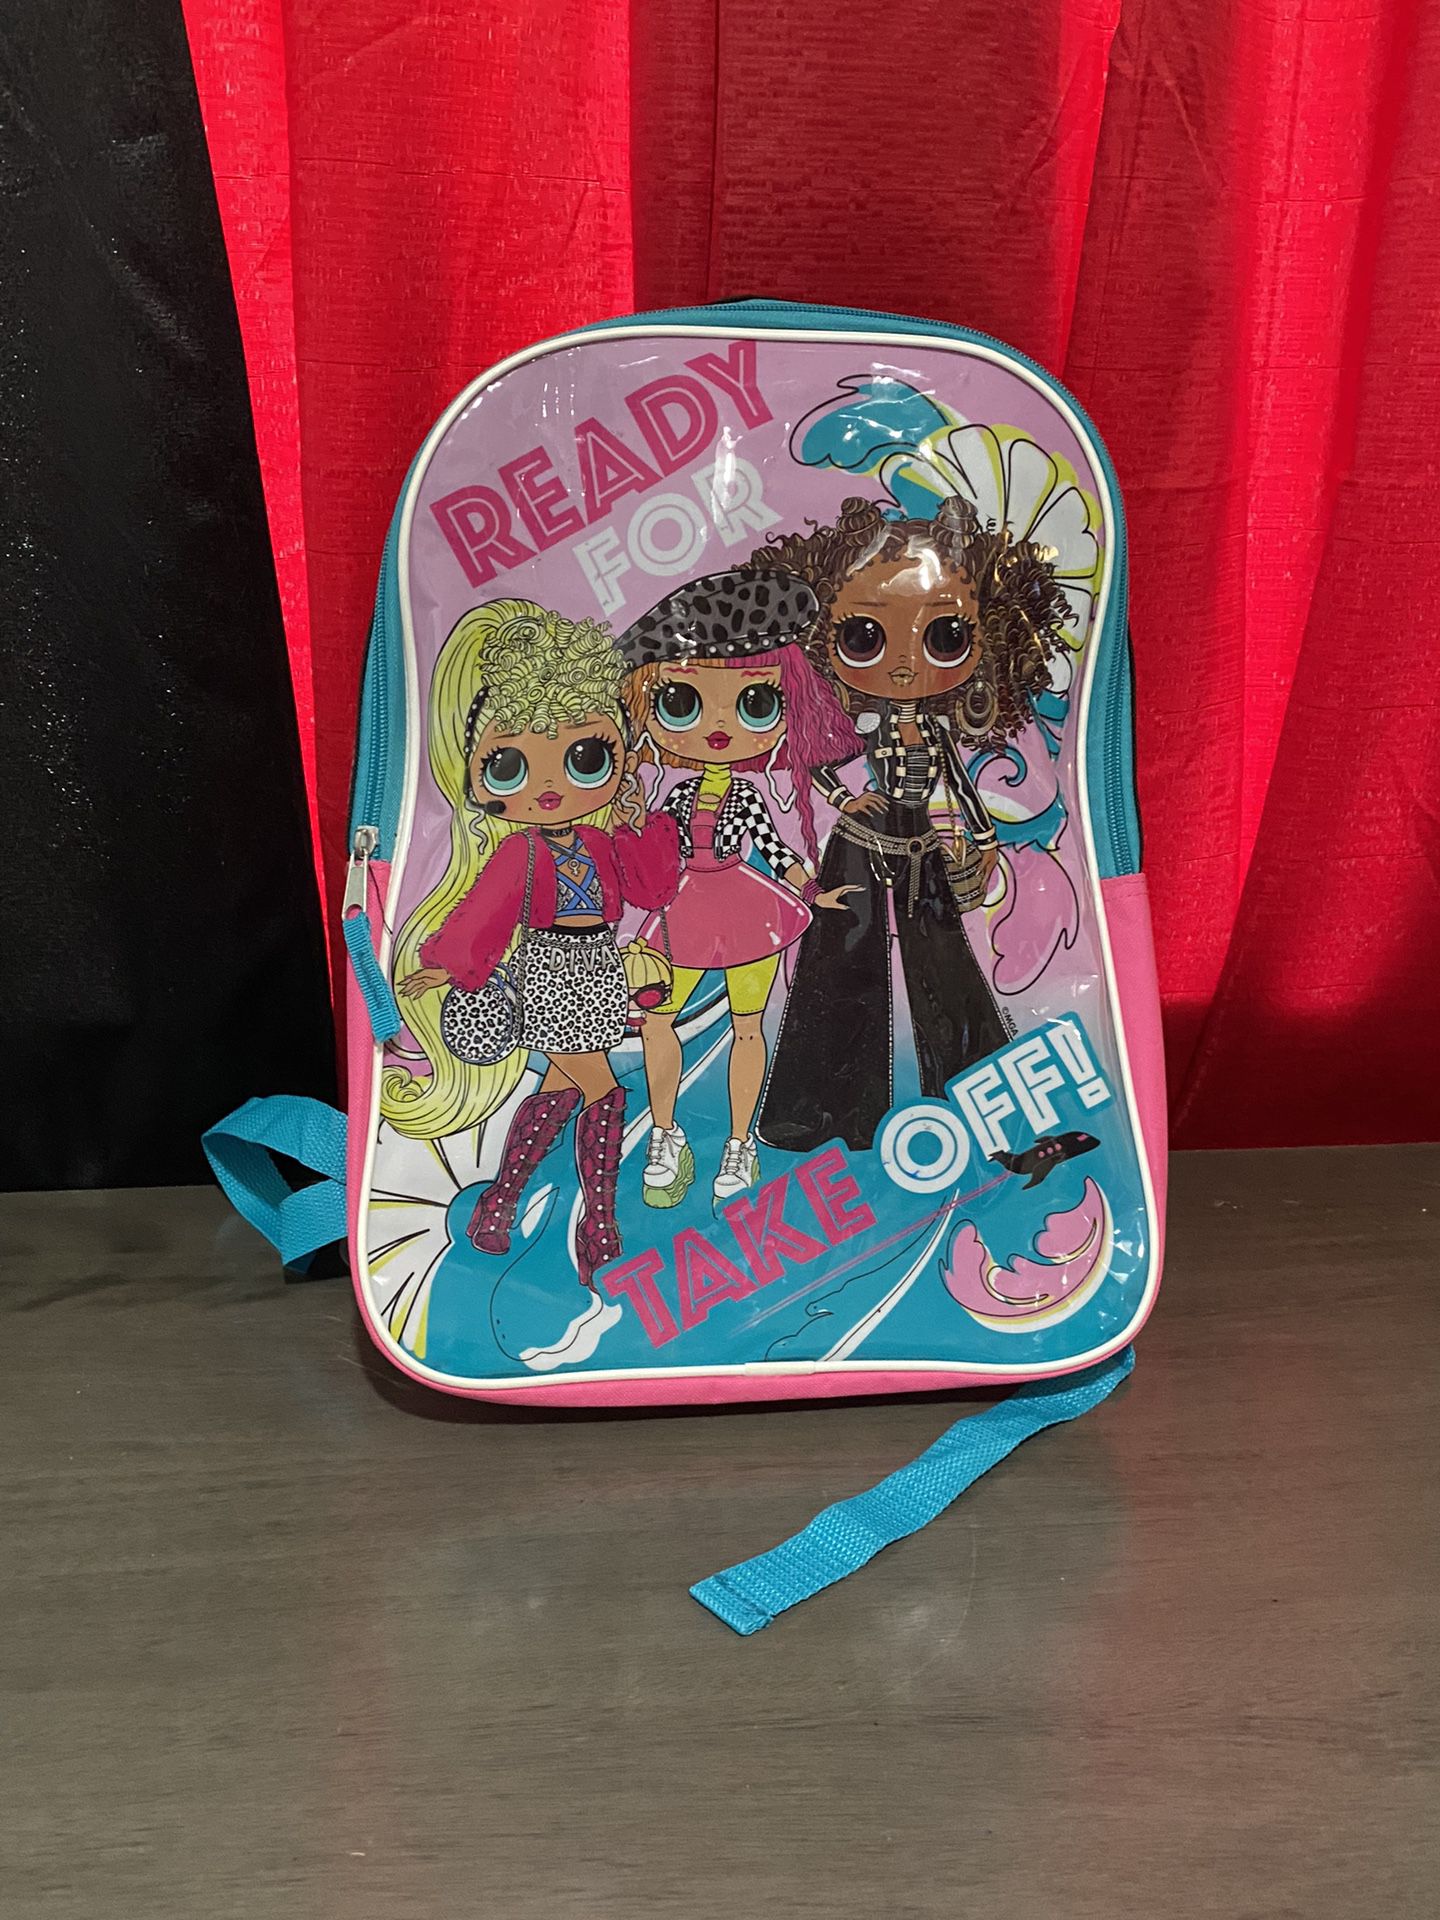 Backpack 15" LOL Surprise Lady Diva Royal Bee OMG Girls / Disney Princess